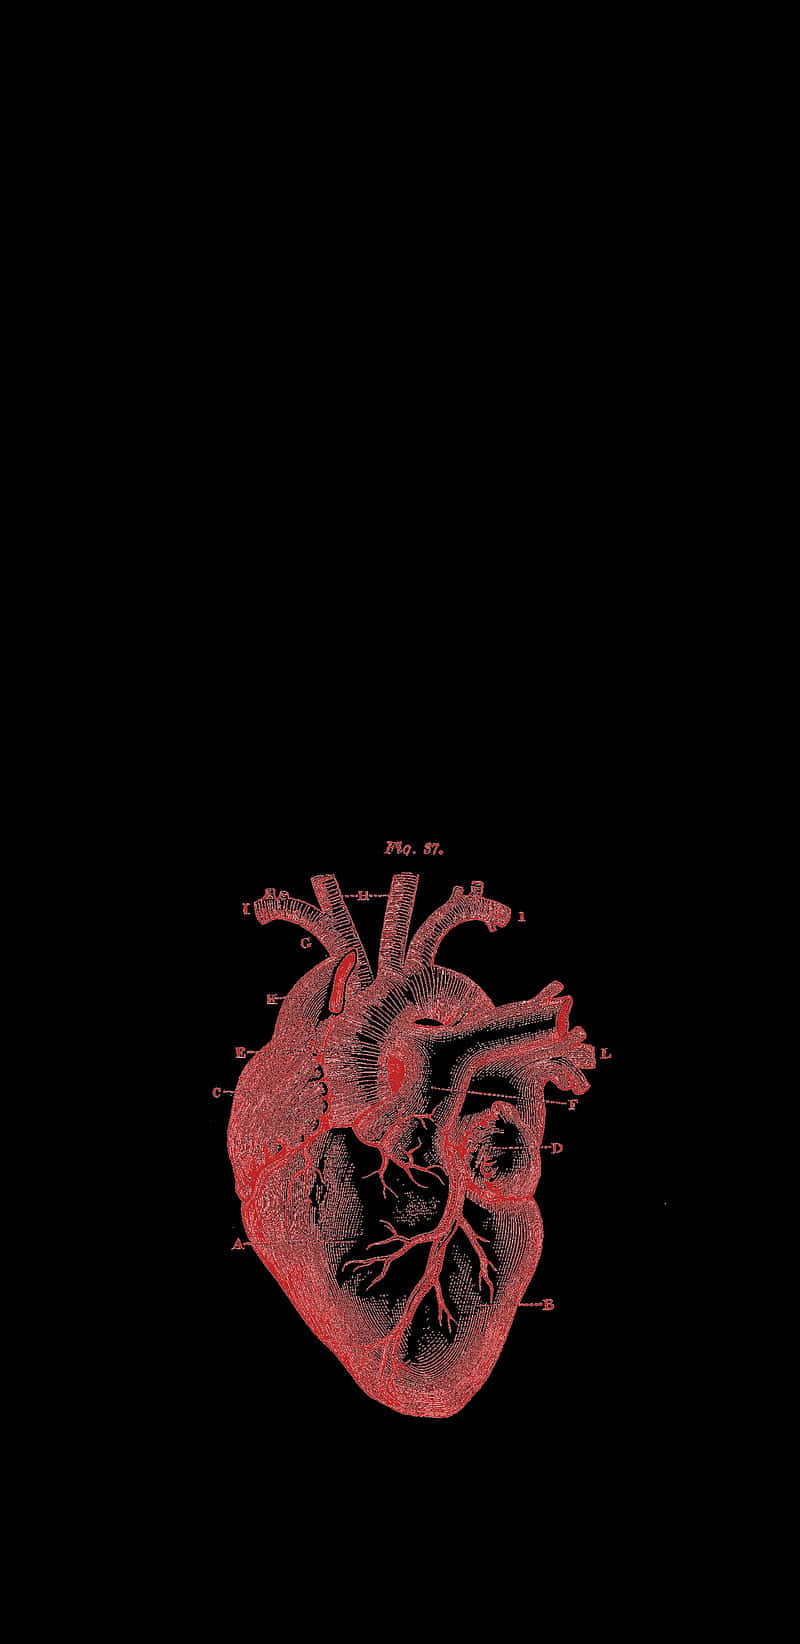 Real Heart Black Heart Iphone Wallpaper